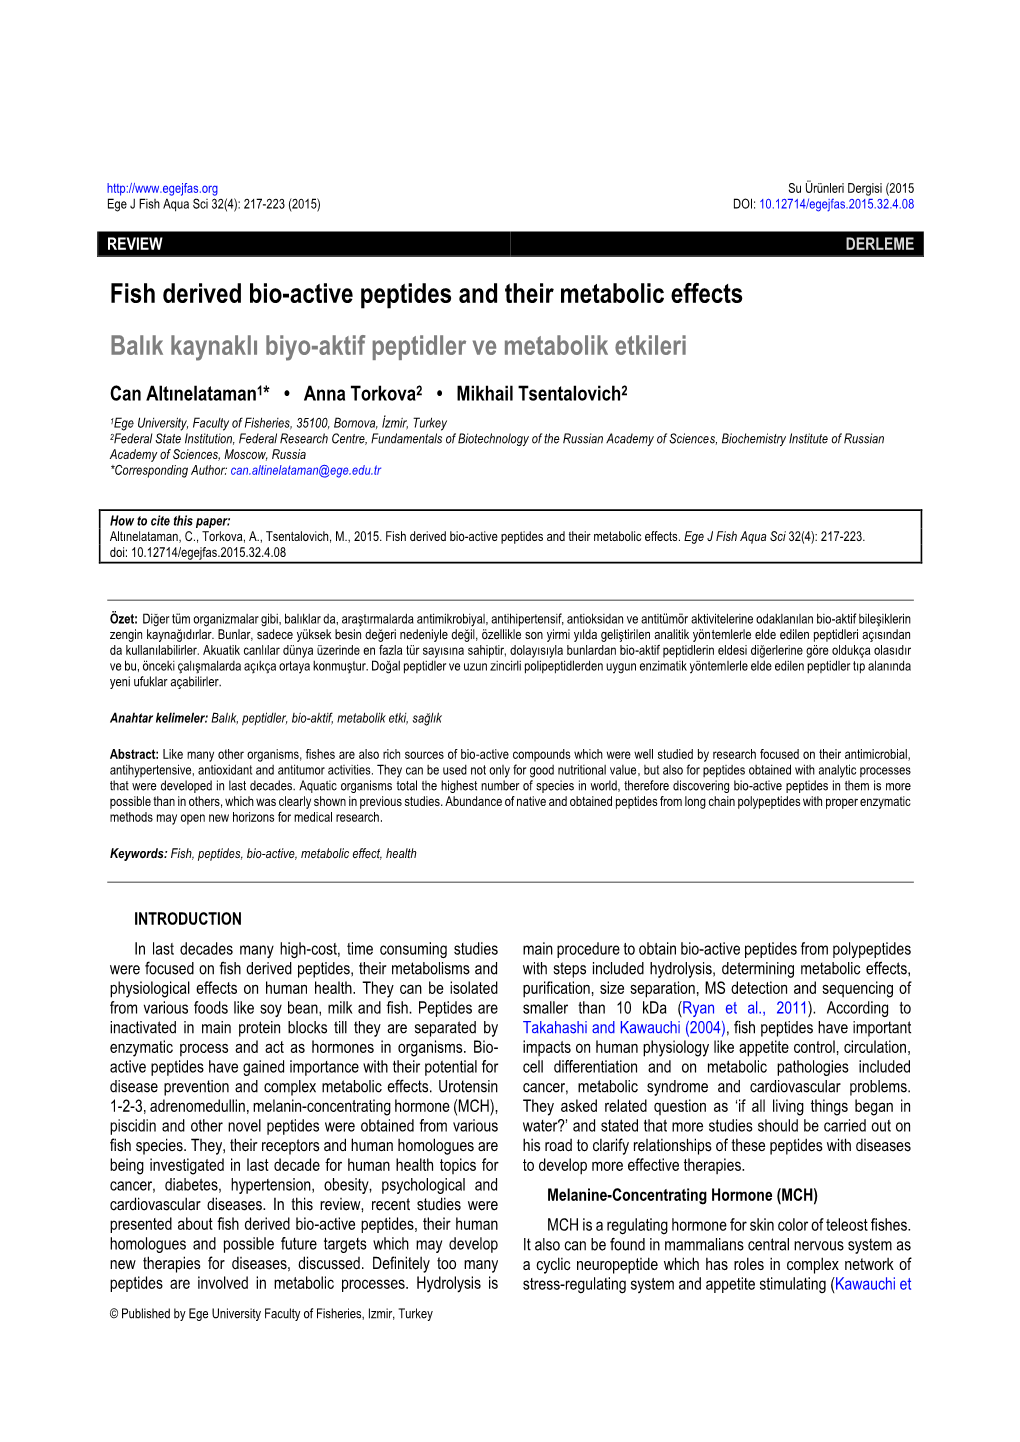 Fish Derived Bio-Active Peptides and Their Metabolic Effects Balık Kaynaklı Biyo-Aktif Peptidler Ve Metabolik Etkileri